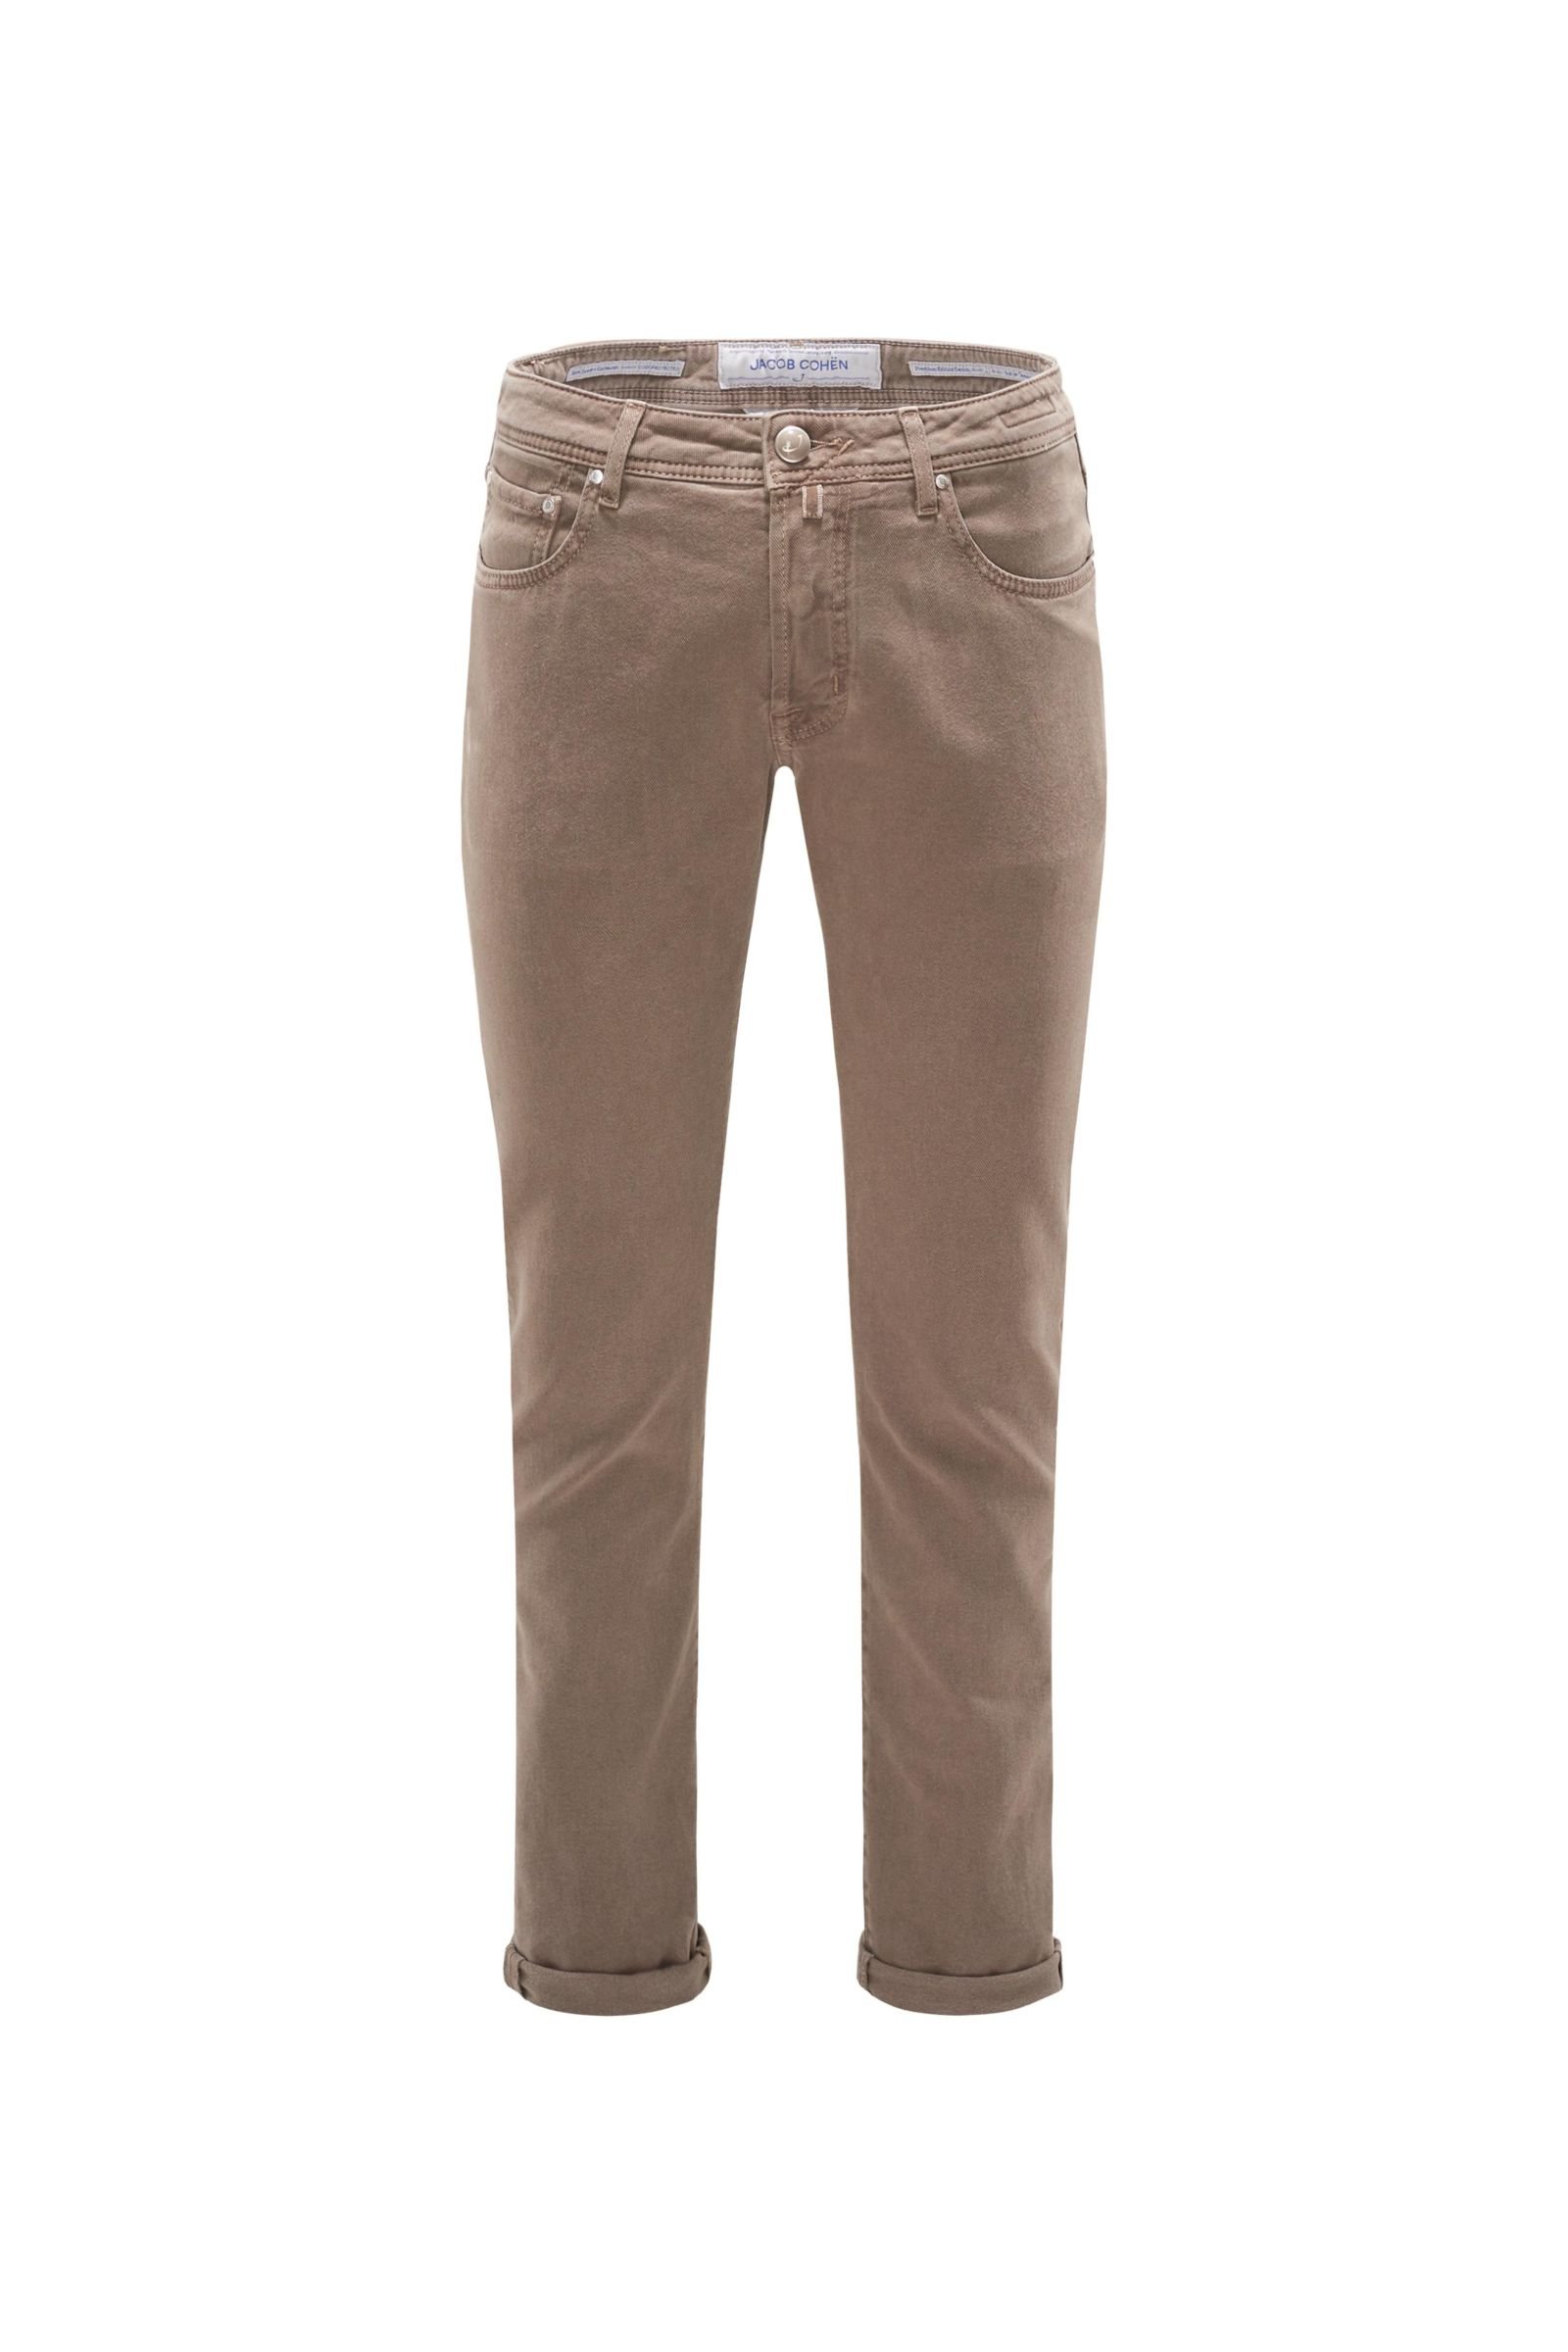 Cotton trousers 'J688 Comfort Slim Fit' grey-brown